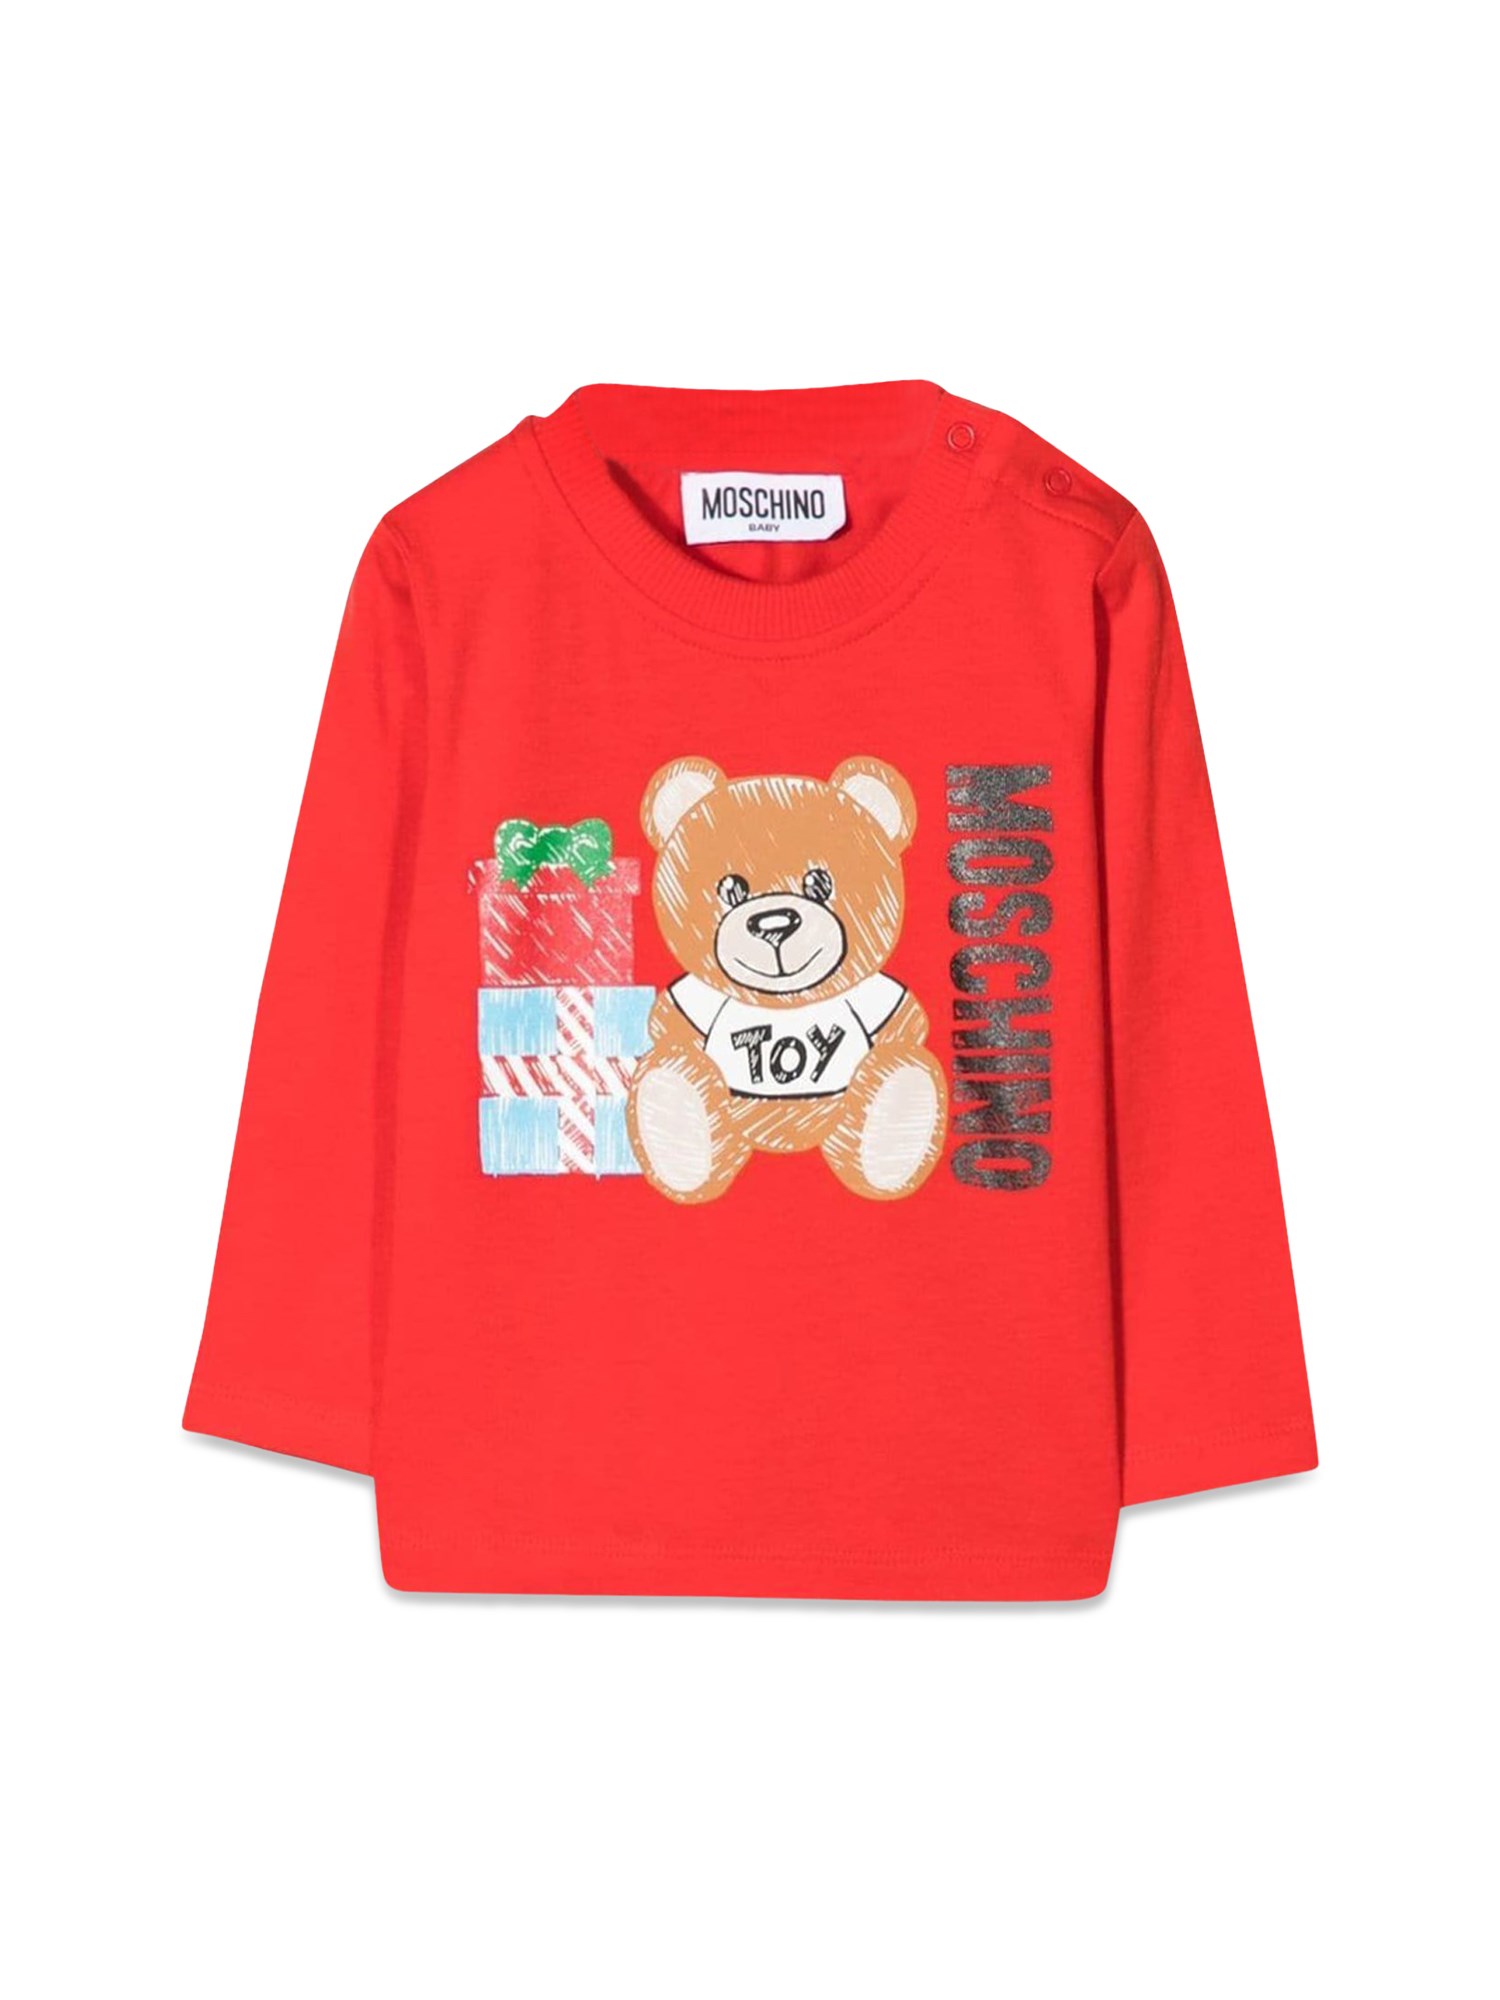 moschino t-shirt m/l teddy bear gifts